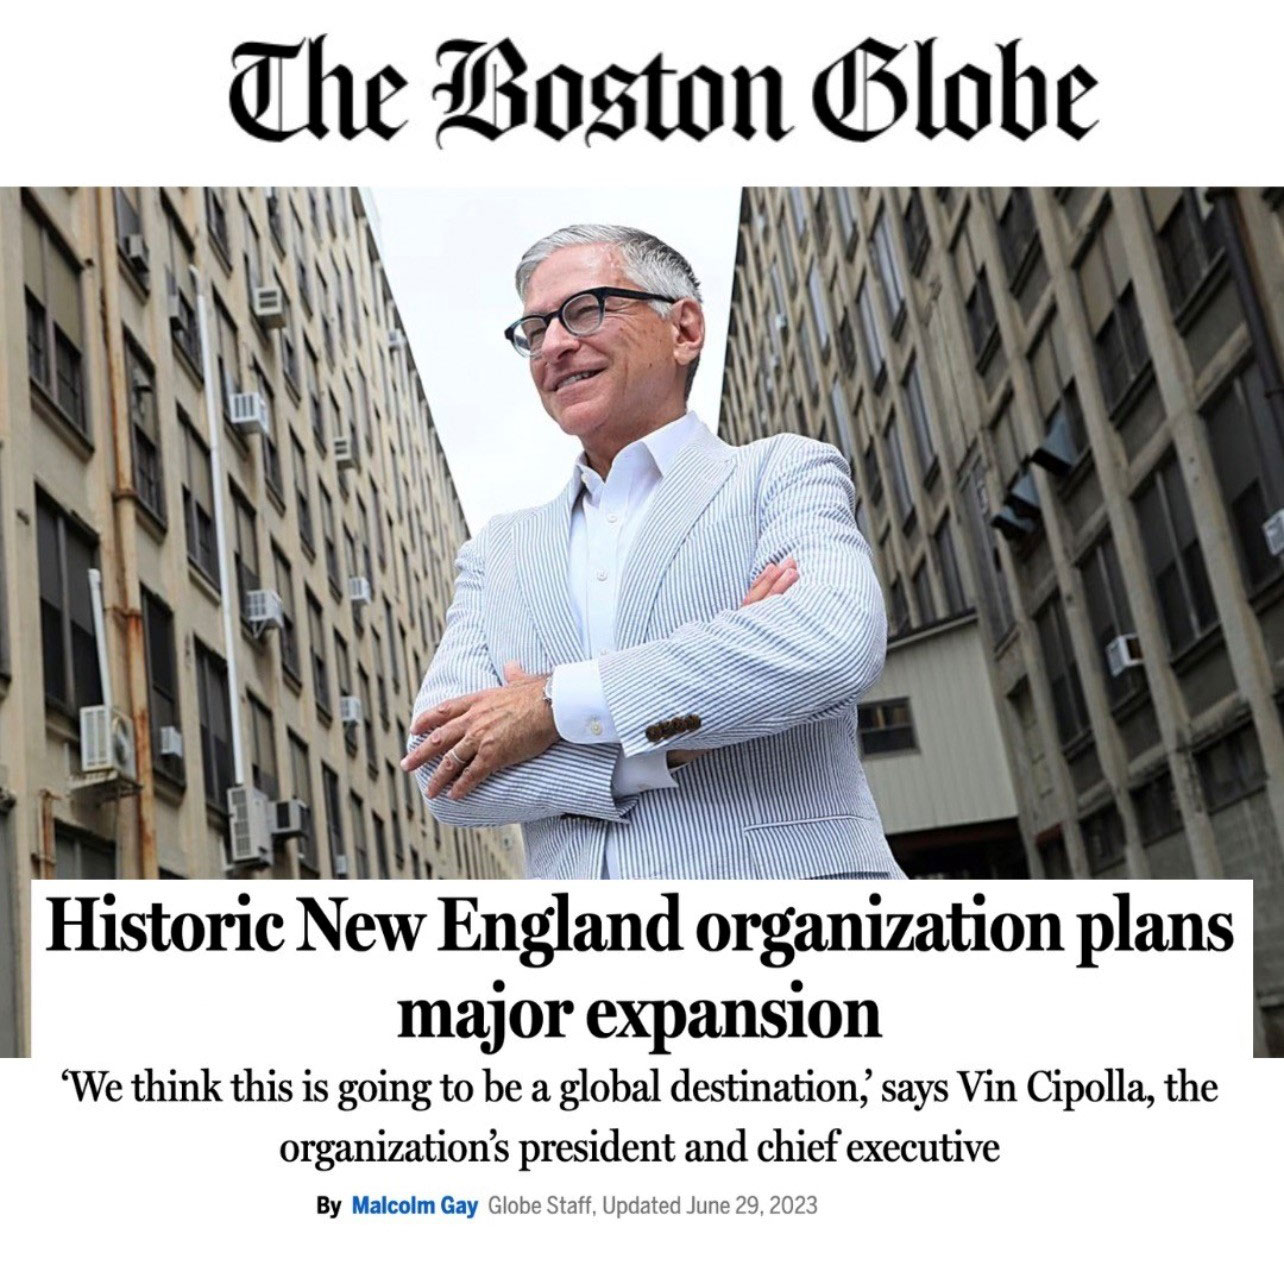 BHA’s Haverhill Provocation in the Boston Globe